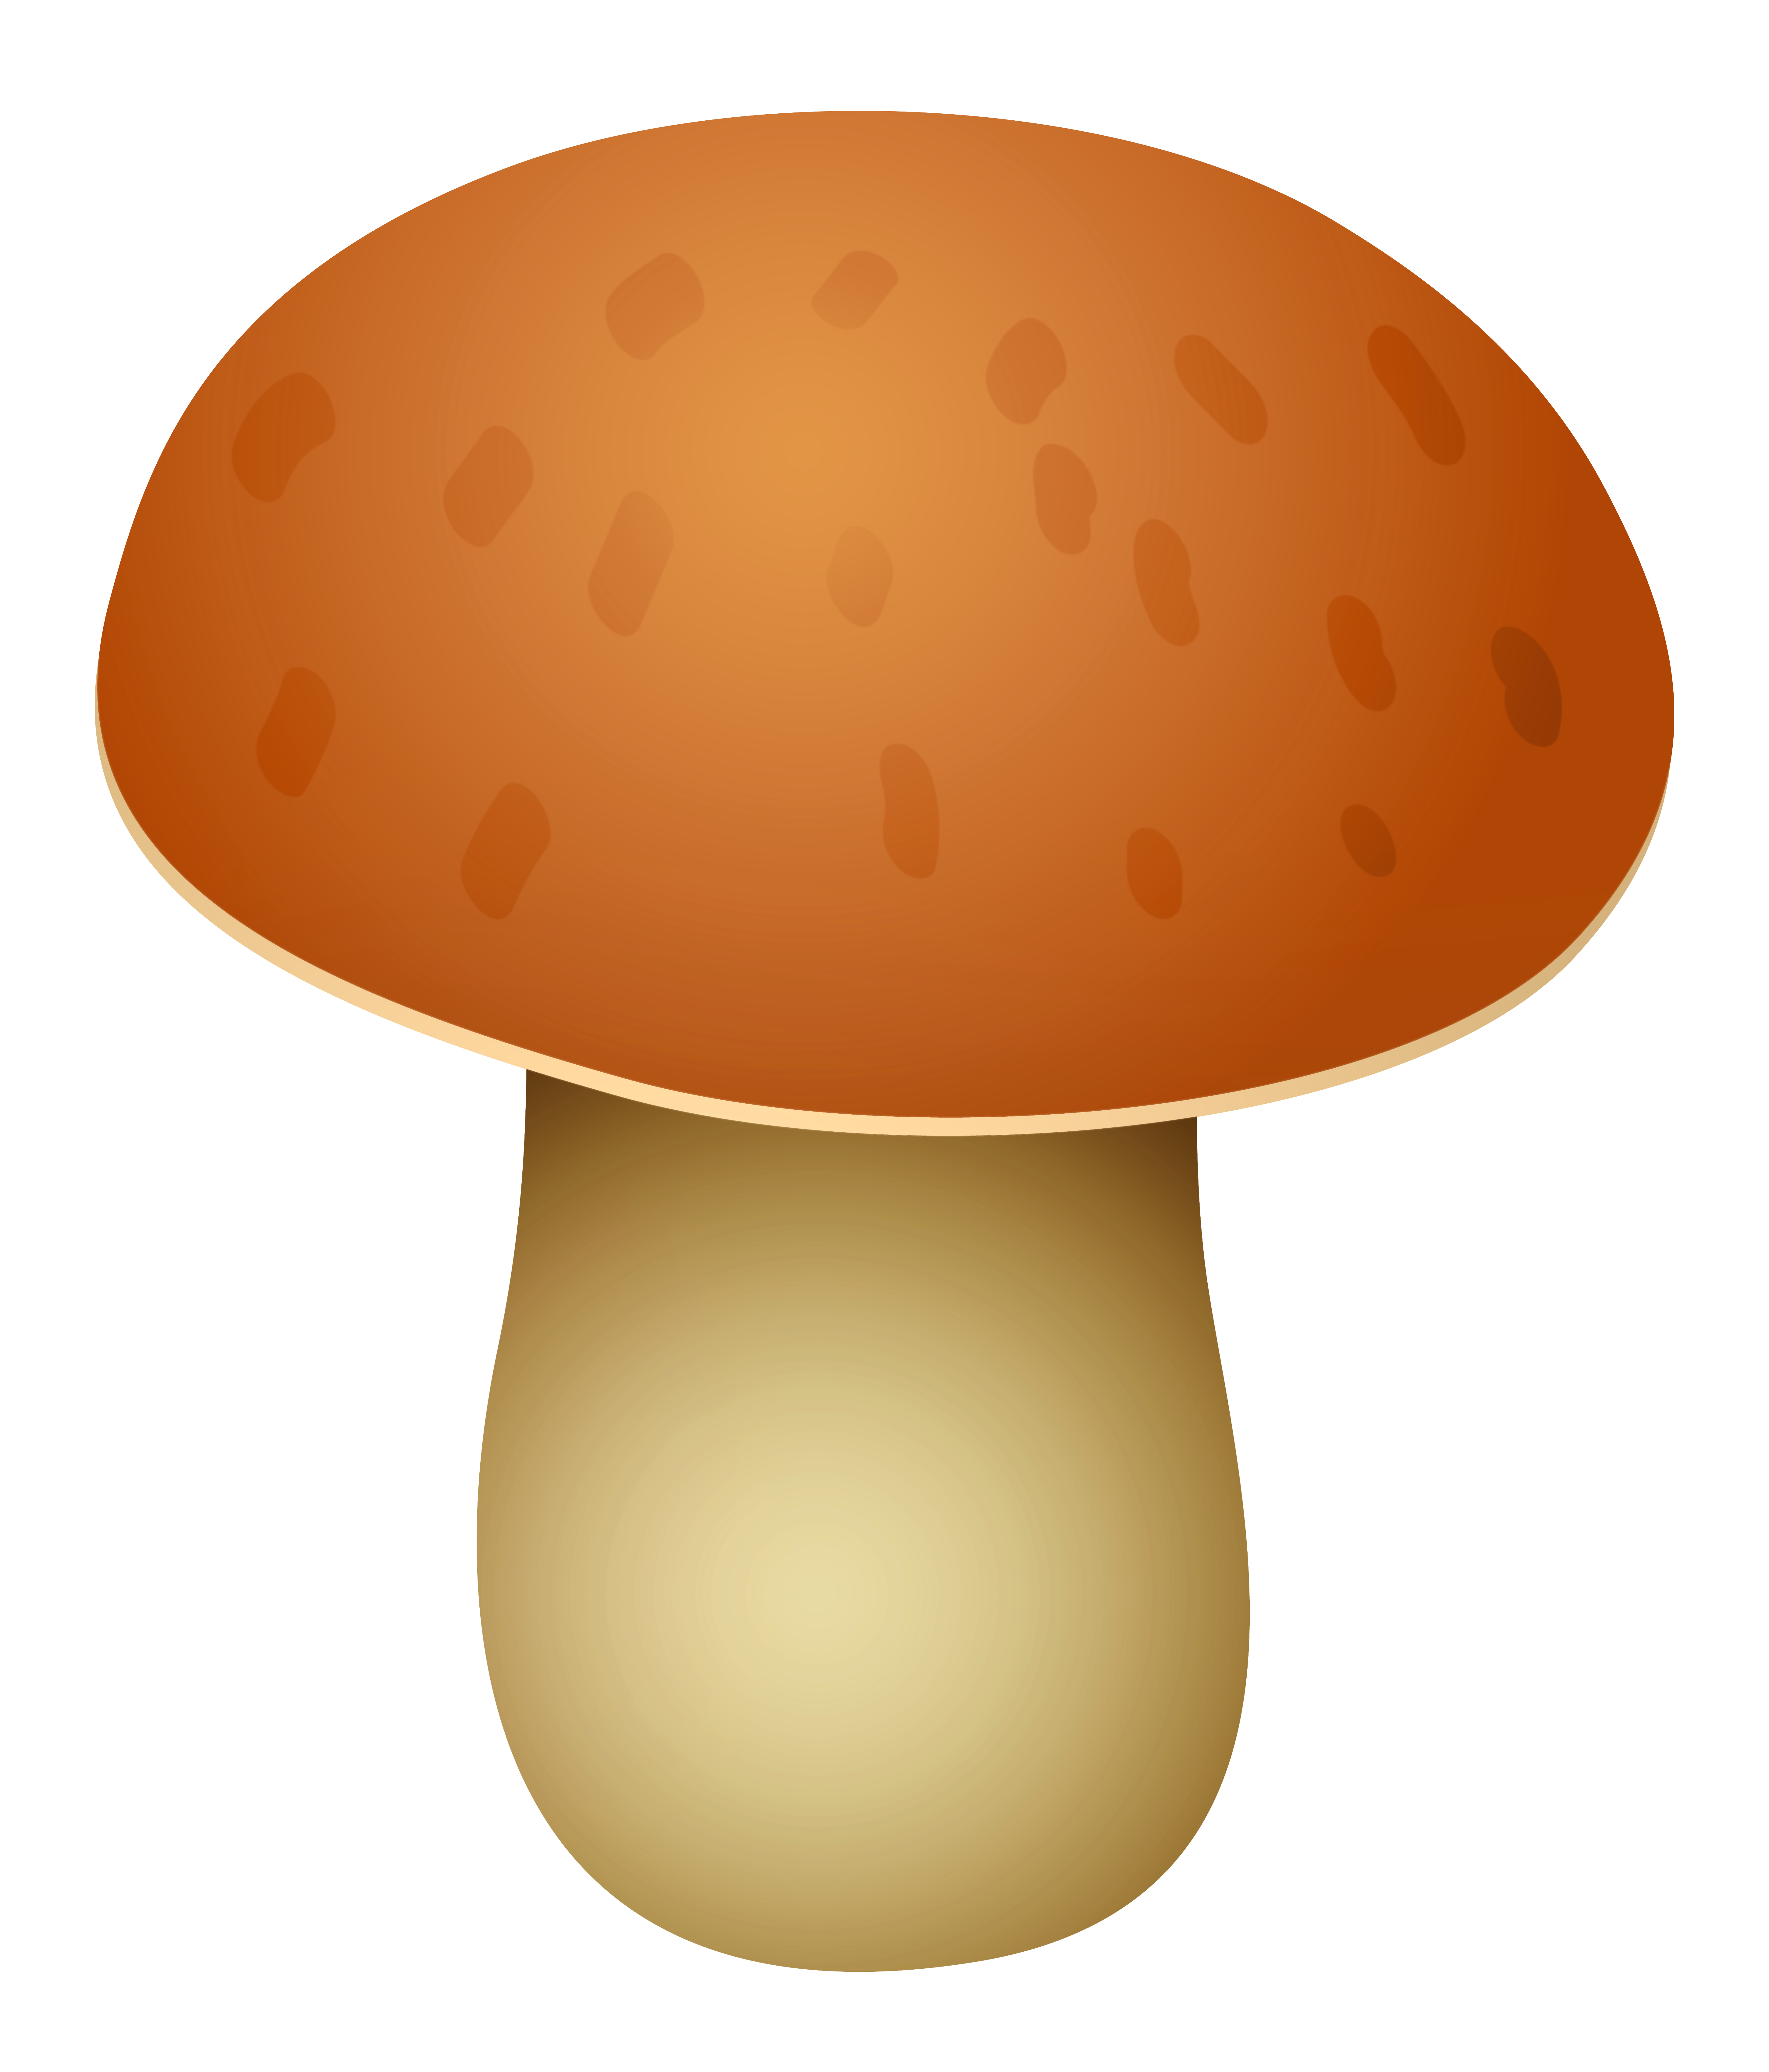 red mushroom clipart - photo #44